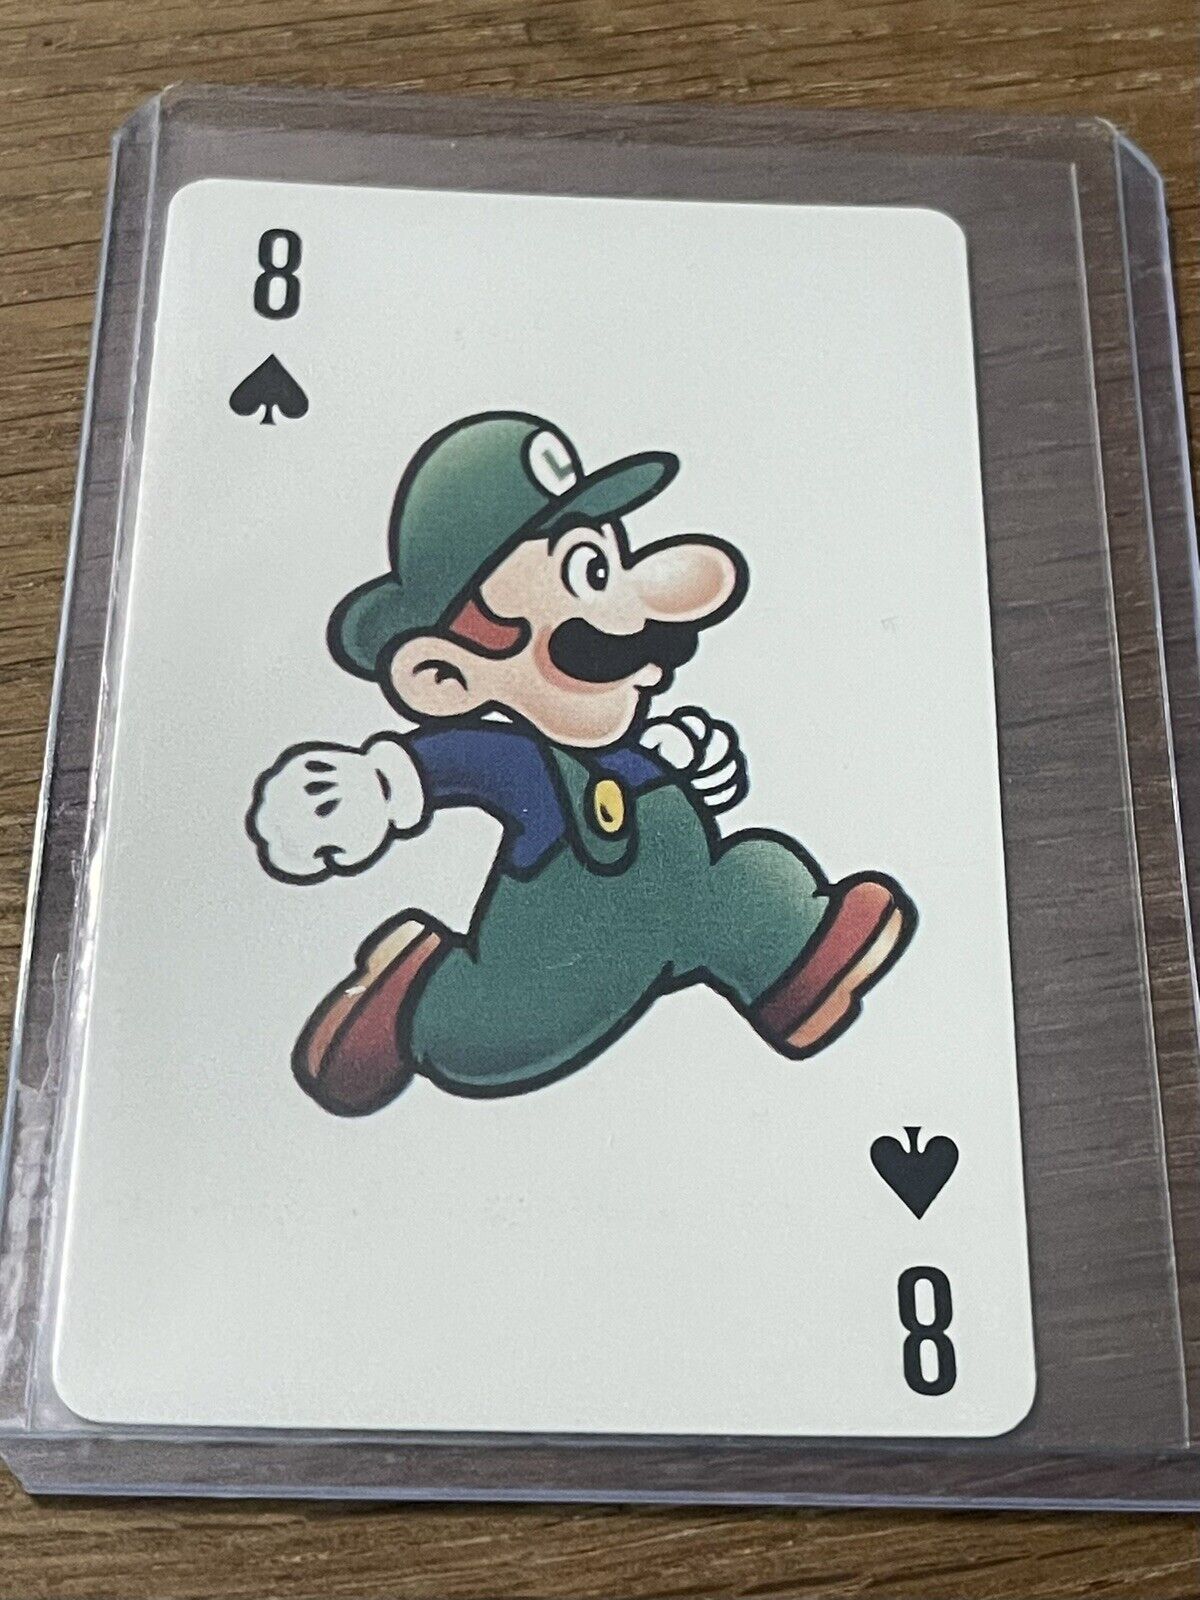 OFFICIAL LICENSED VINTAGE 1989 NINTENDO CARD GAME SUPER MARIO LUIGI PLAYING CARD